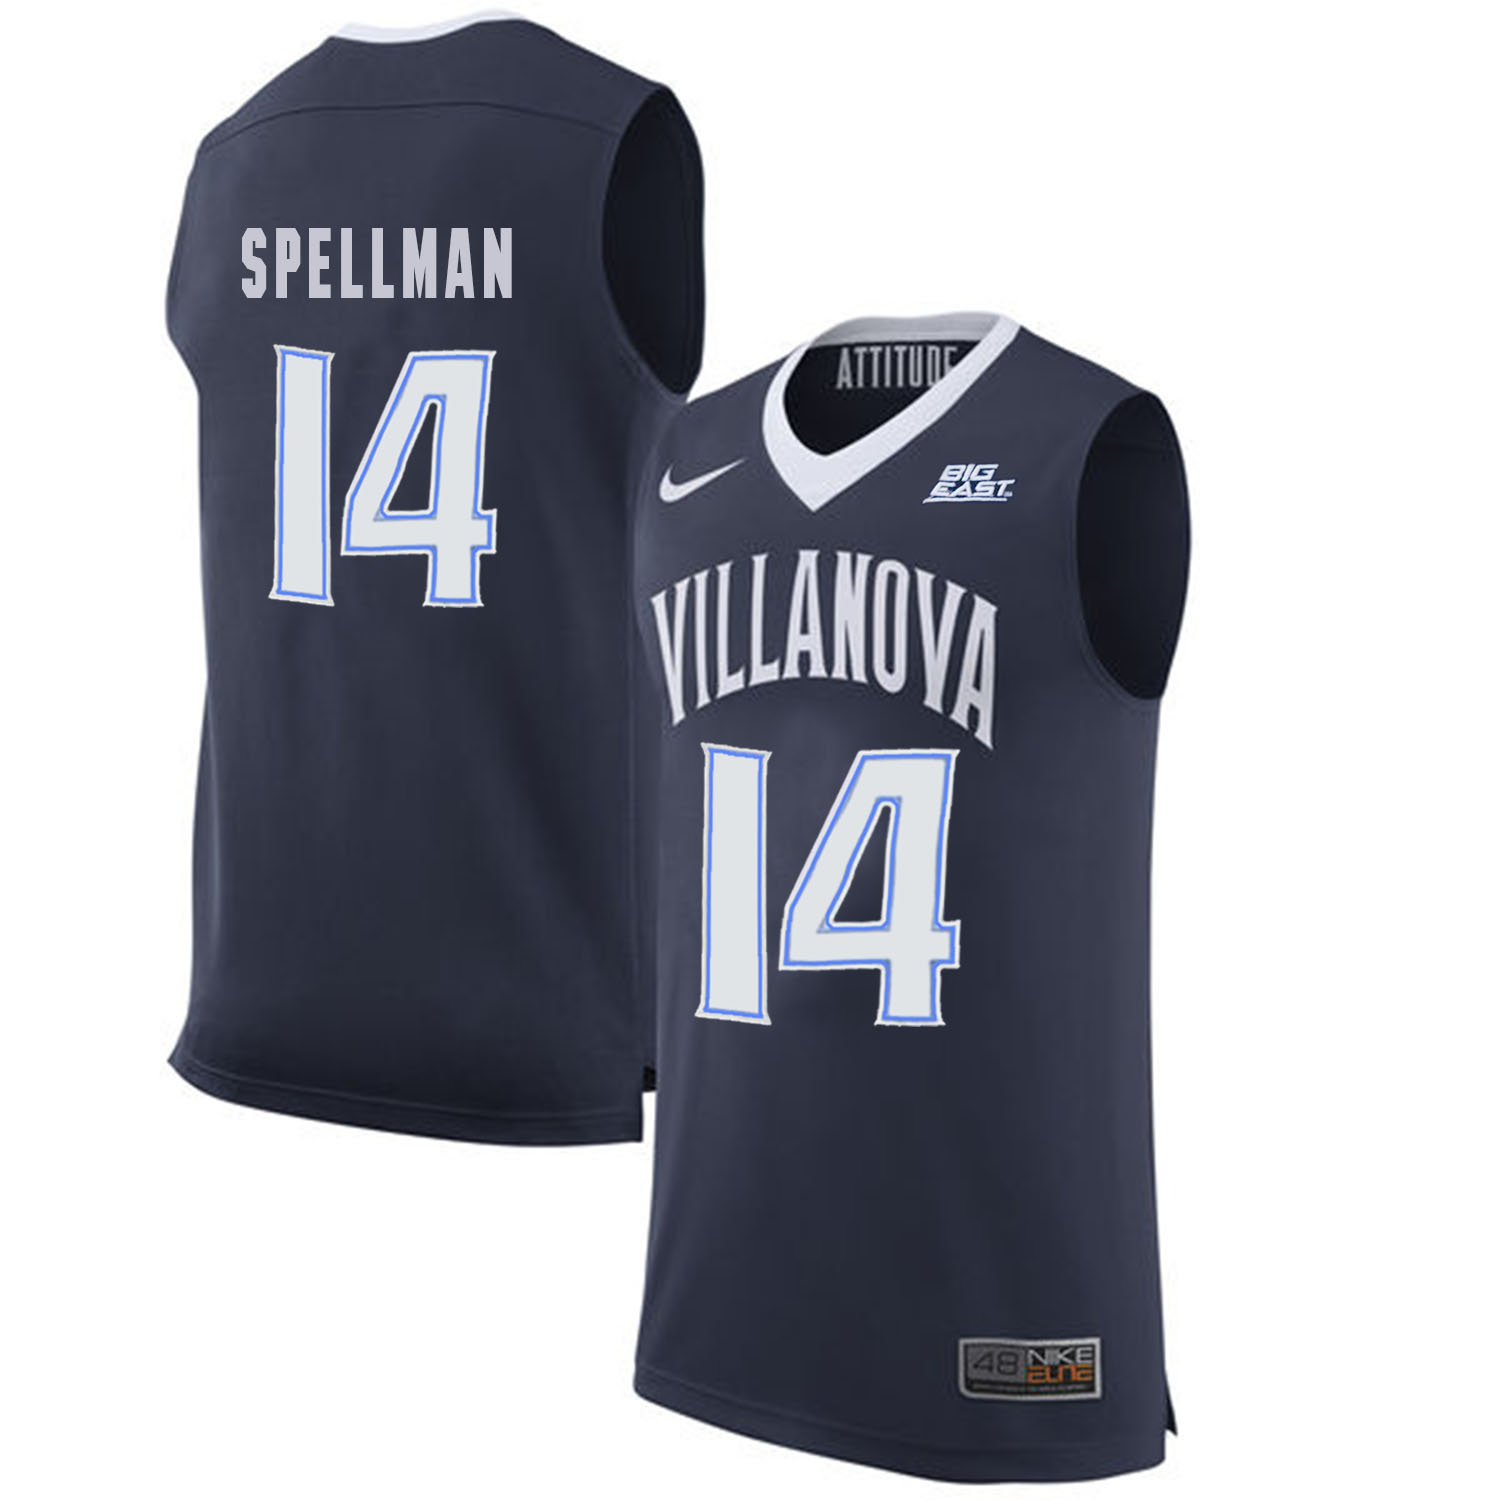 Villanova Wildcats 14 Omari Spellman Navy College Basketball Elite Jersey